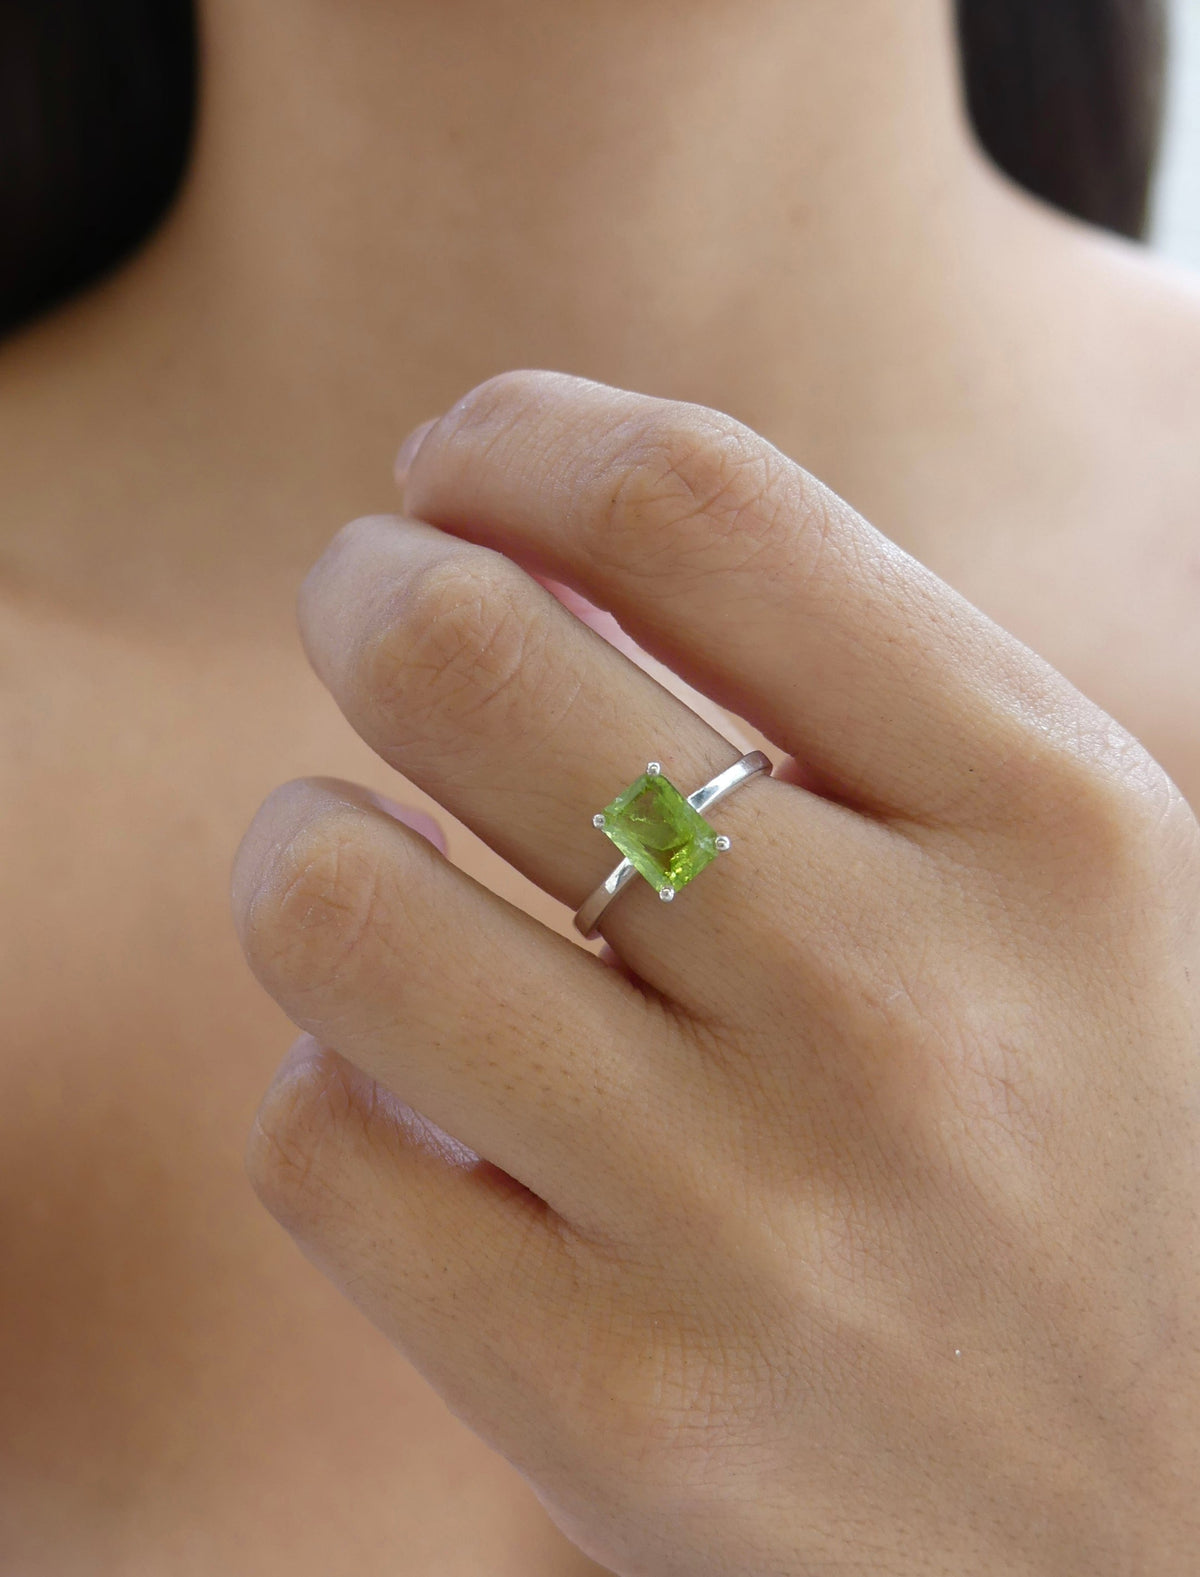 Peridot Silver Ring, 925 Sterling Silver Emerald Cut Ring, Natural Peridot Gemstone Everyday Princess Hypoallergenic Nickel Free Ring